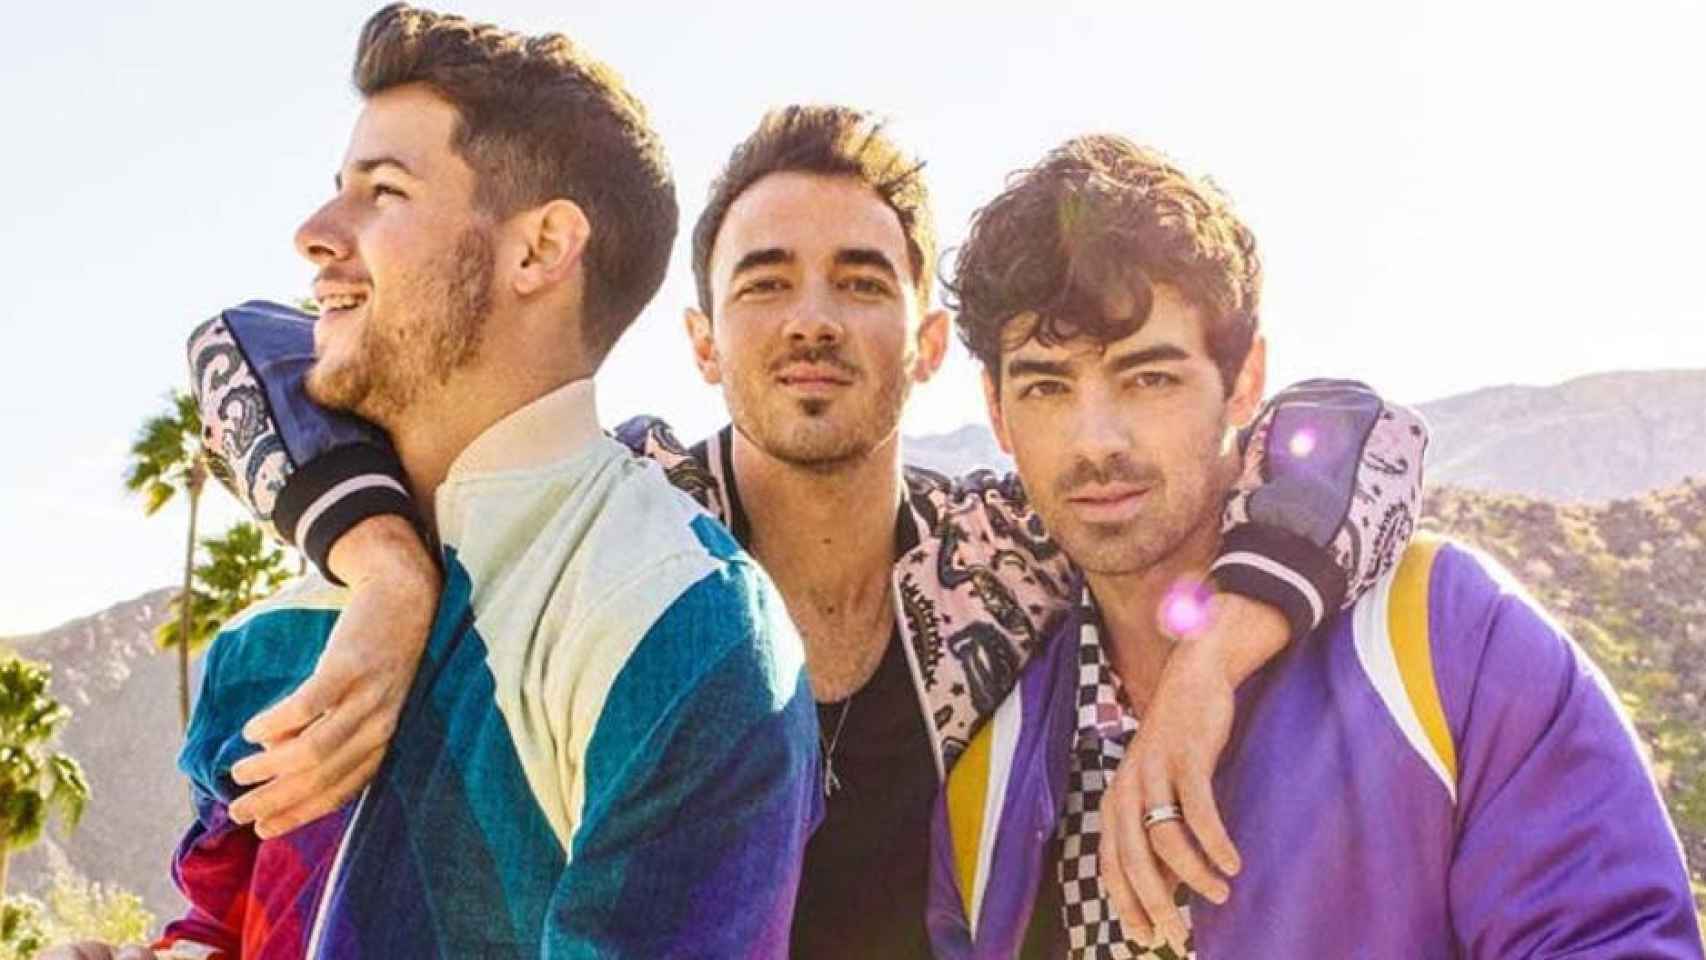 Jonas Brothers / LIVE NATION